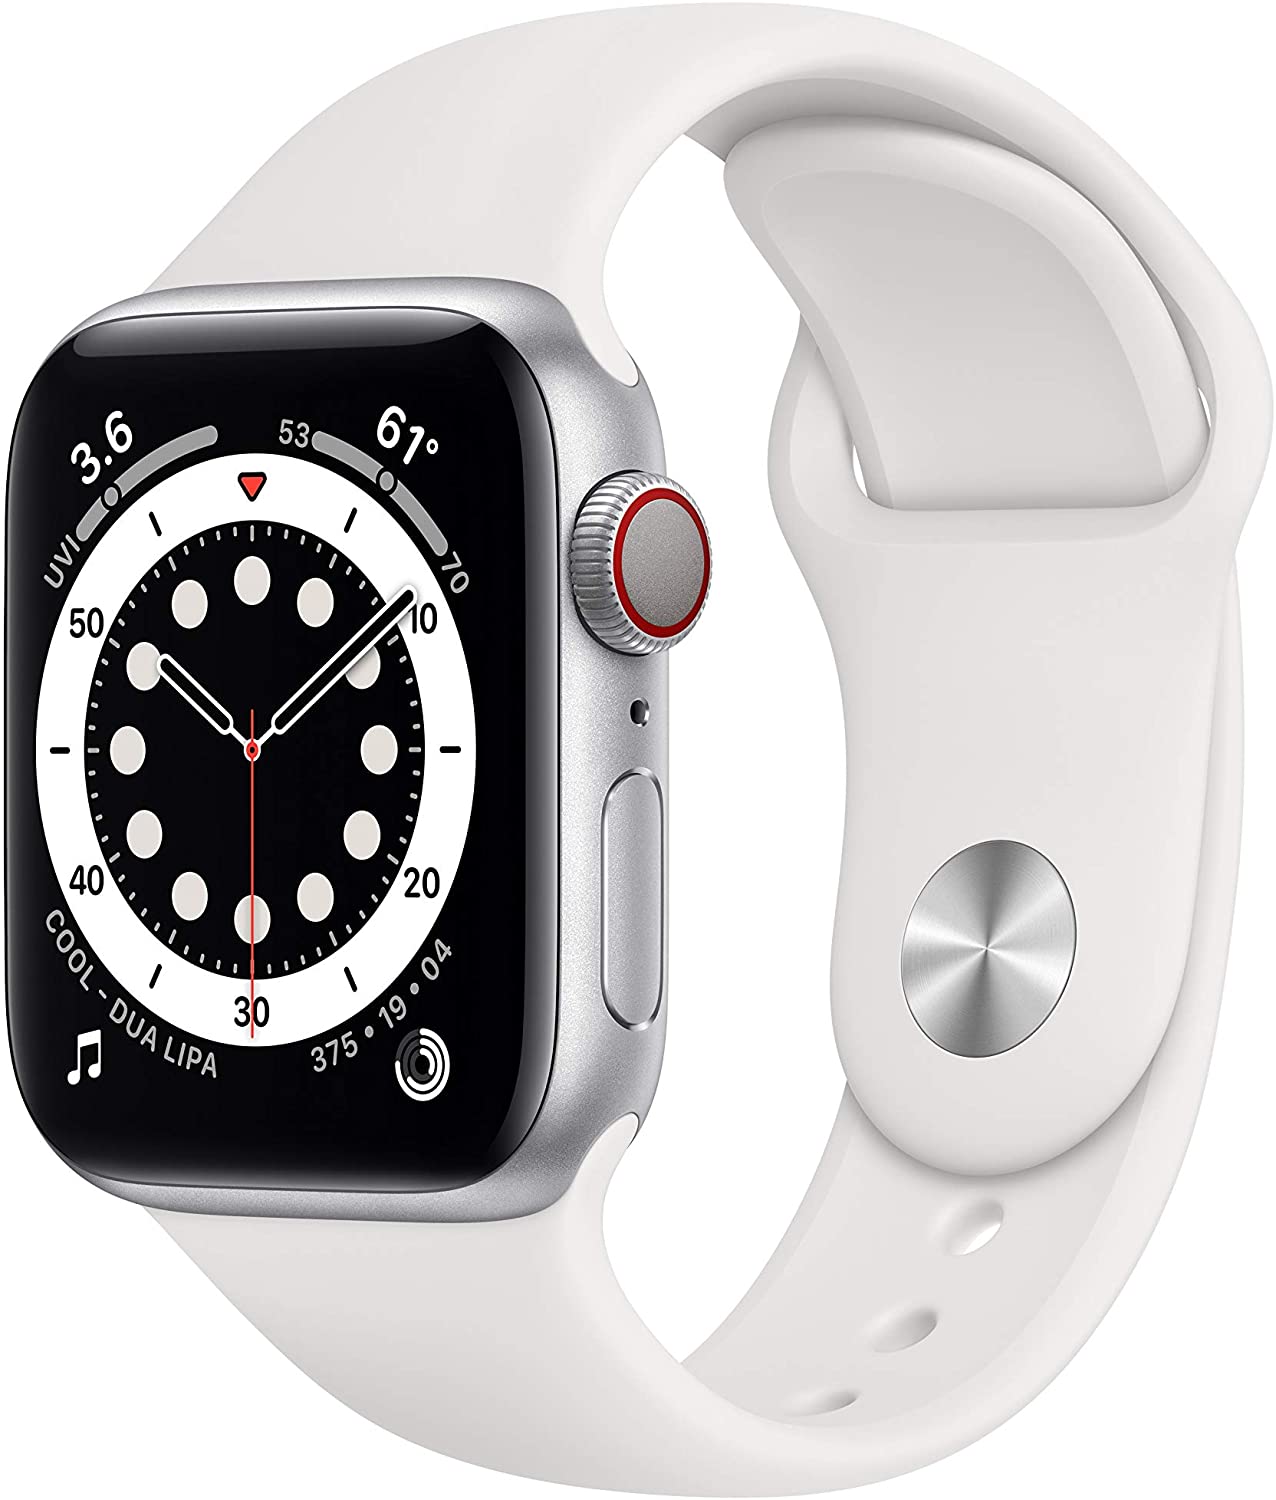 Apple Watch Series 6 White Cellular